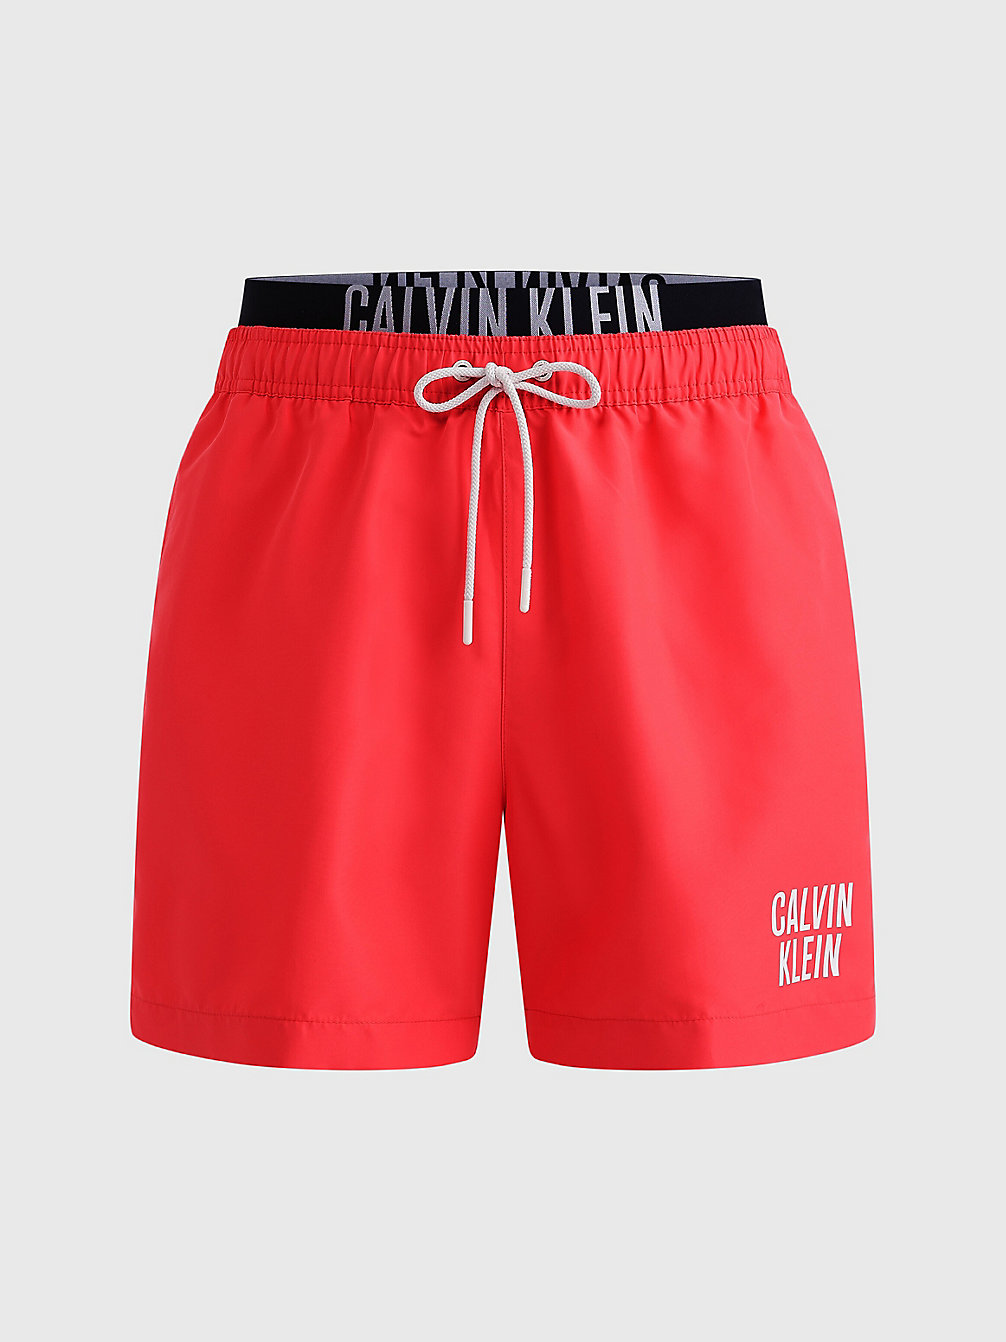 CORAL CRUSH Double Waistband Swim Shorts - Intense Power undefined men Calvin Klein